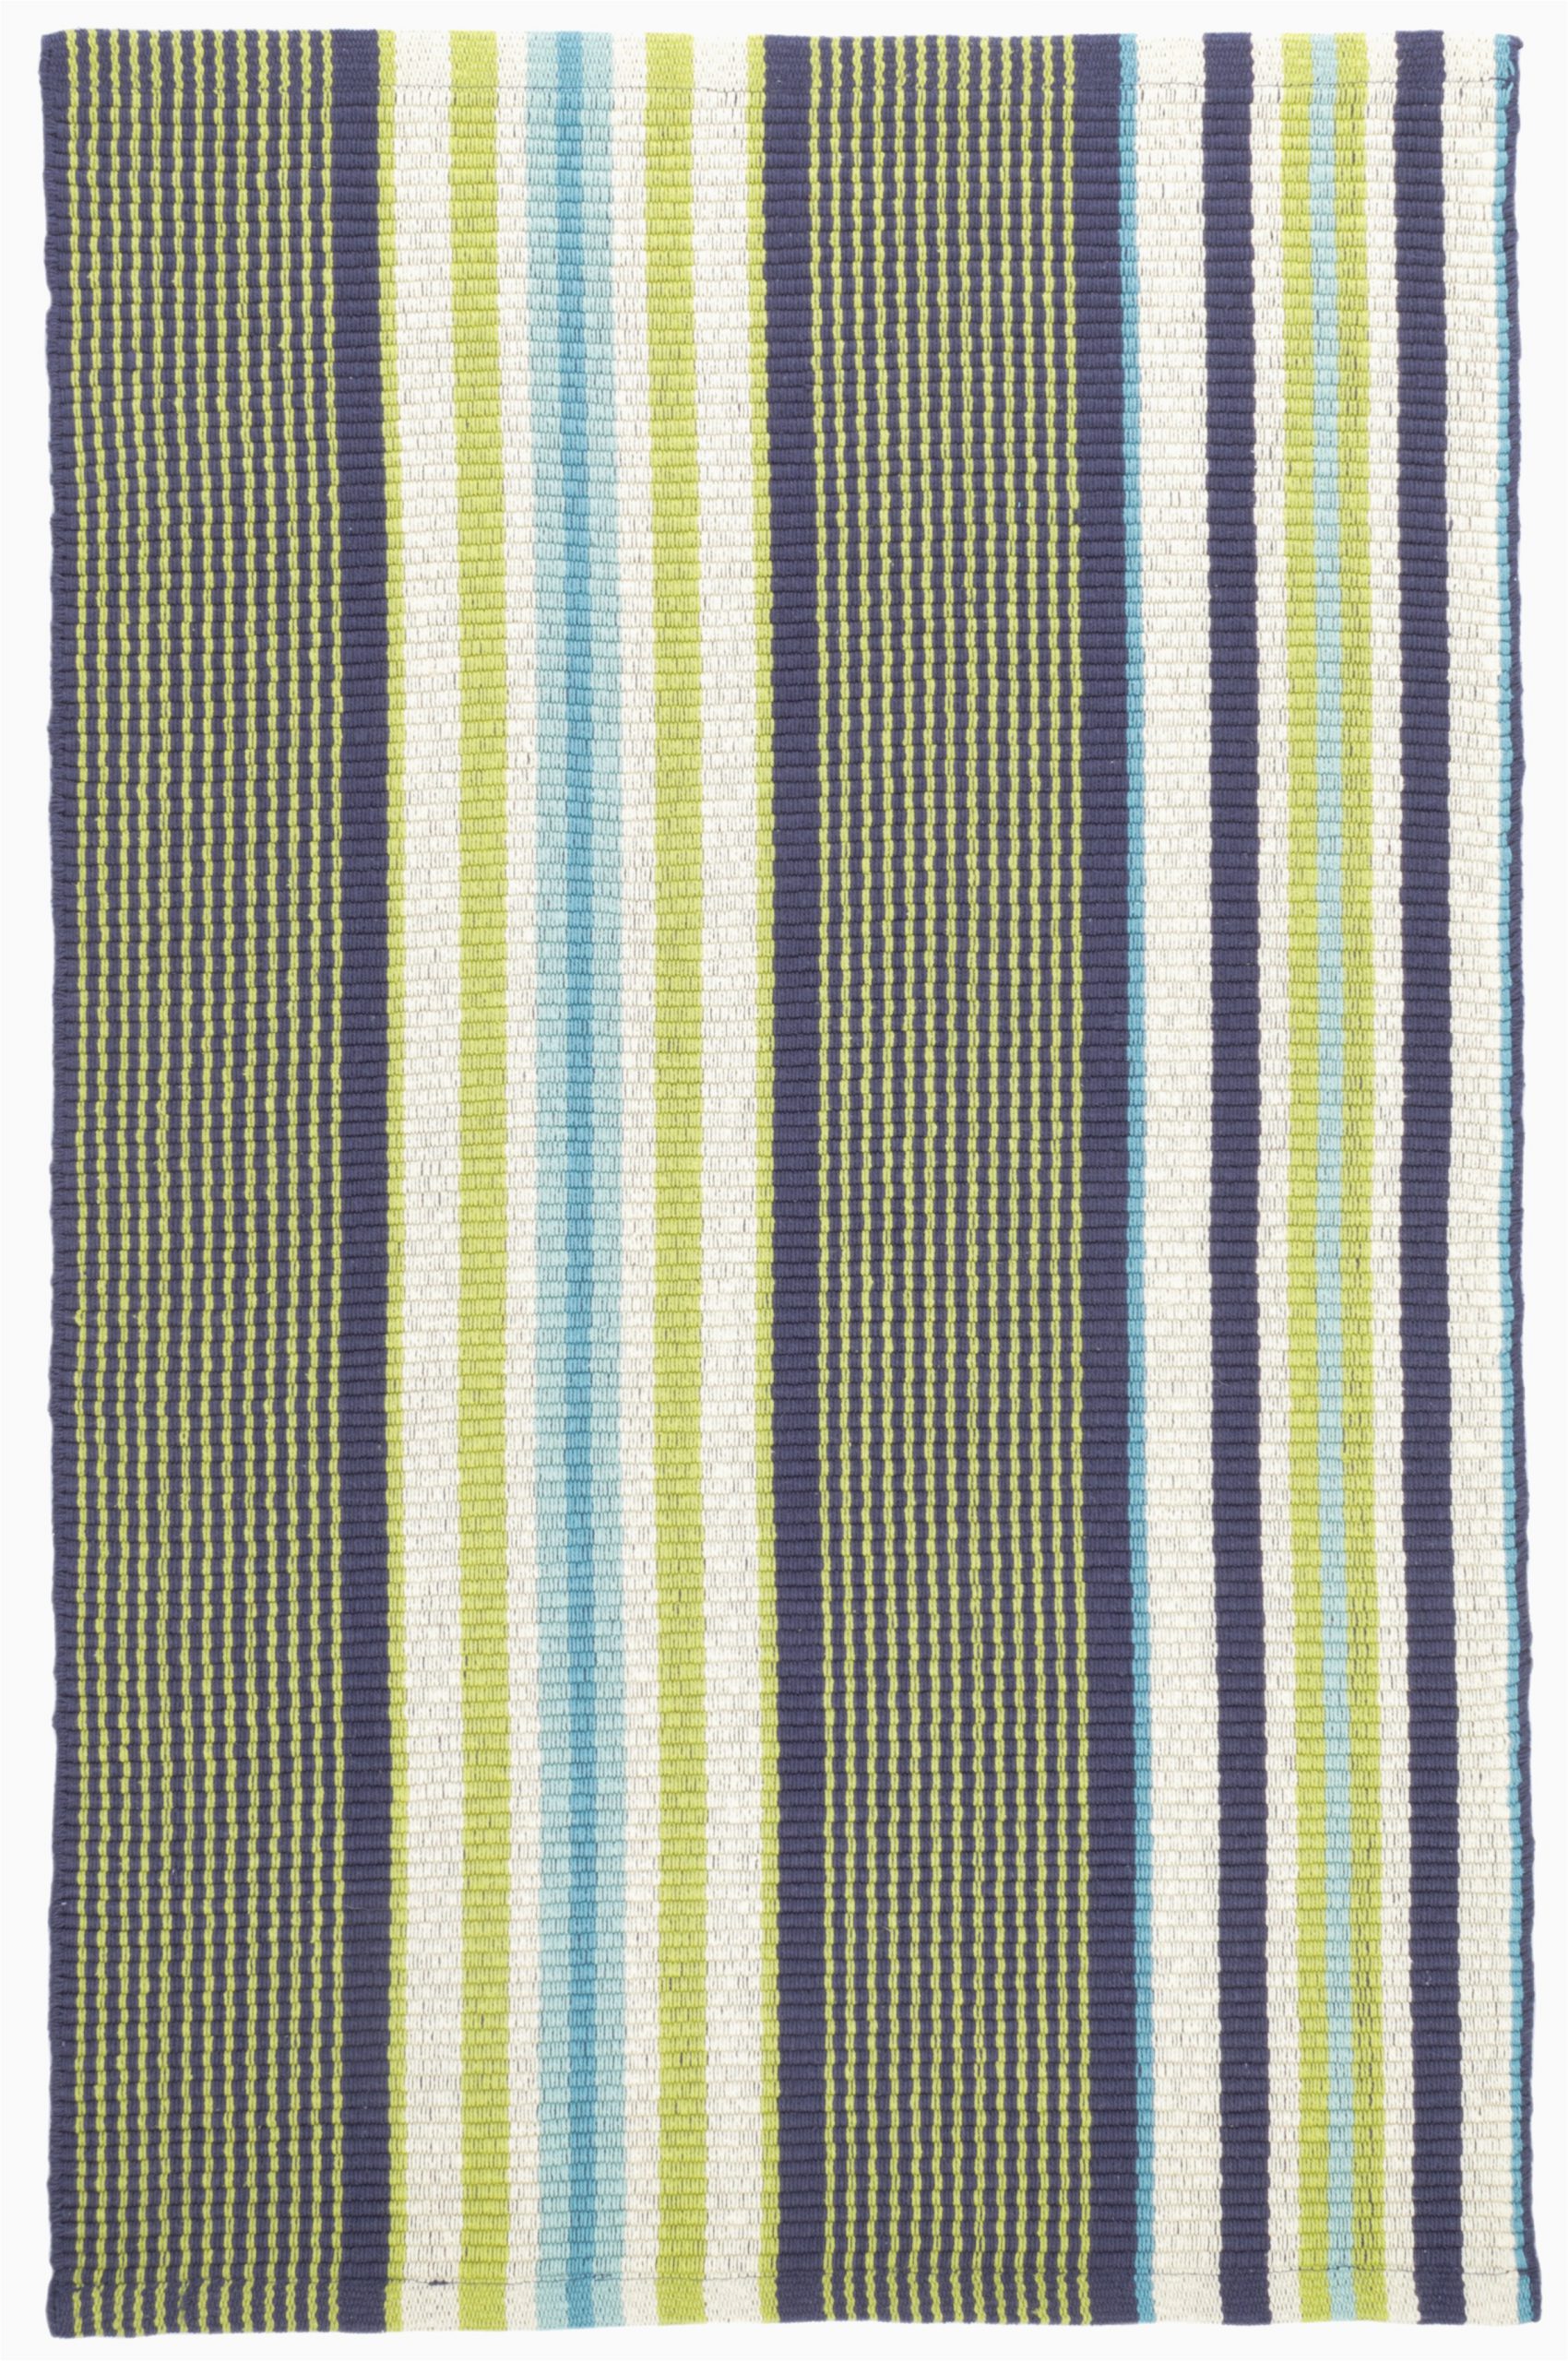 asher striped handmade flatweave cotton bluegreen area rug